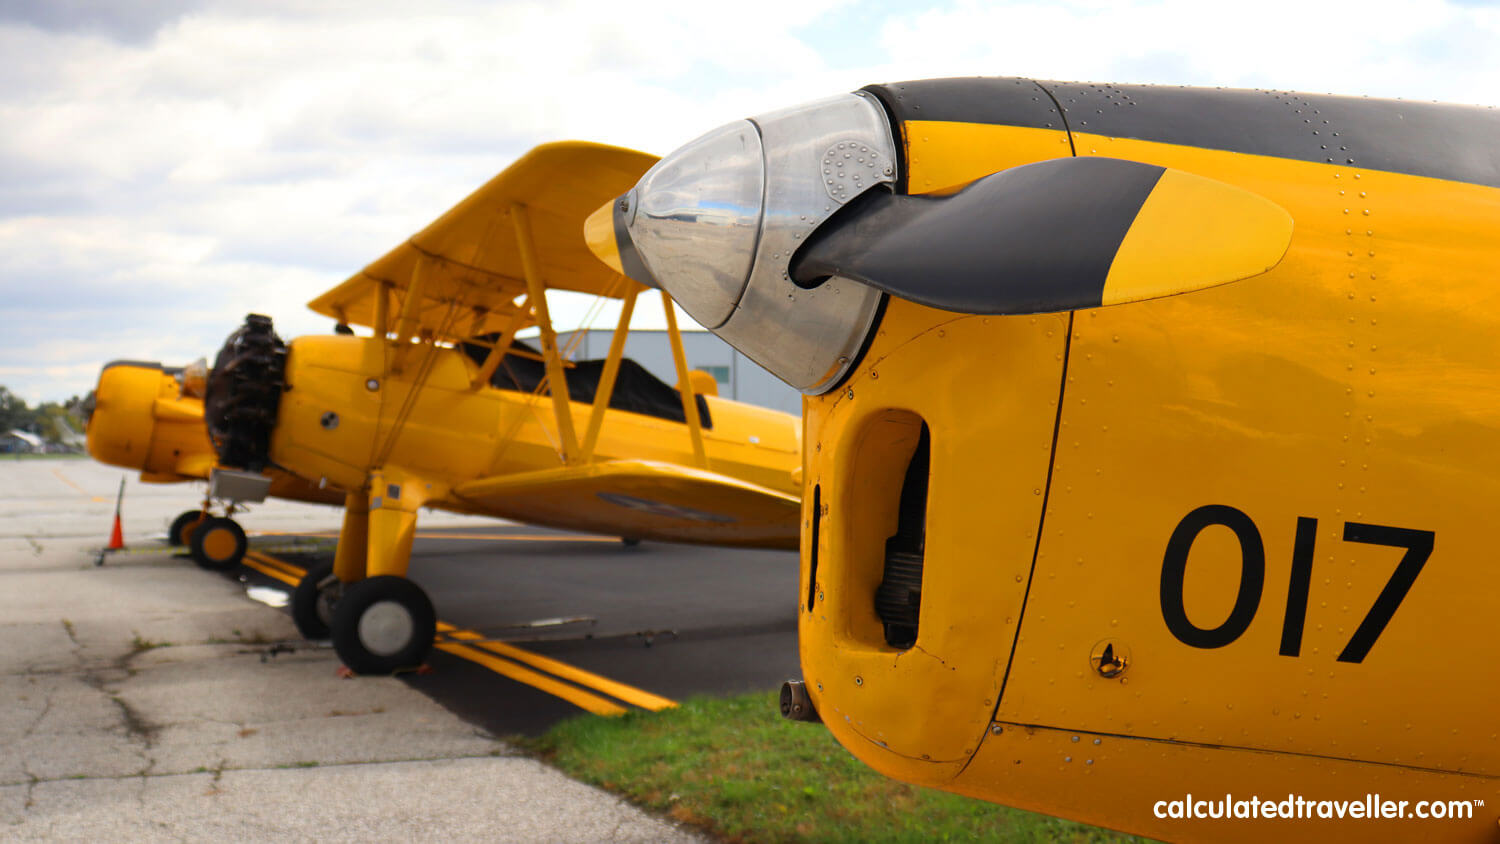 Canadian Aviation Museum, Windsor, Ontario